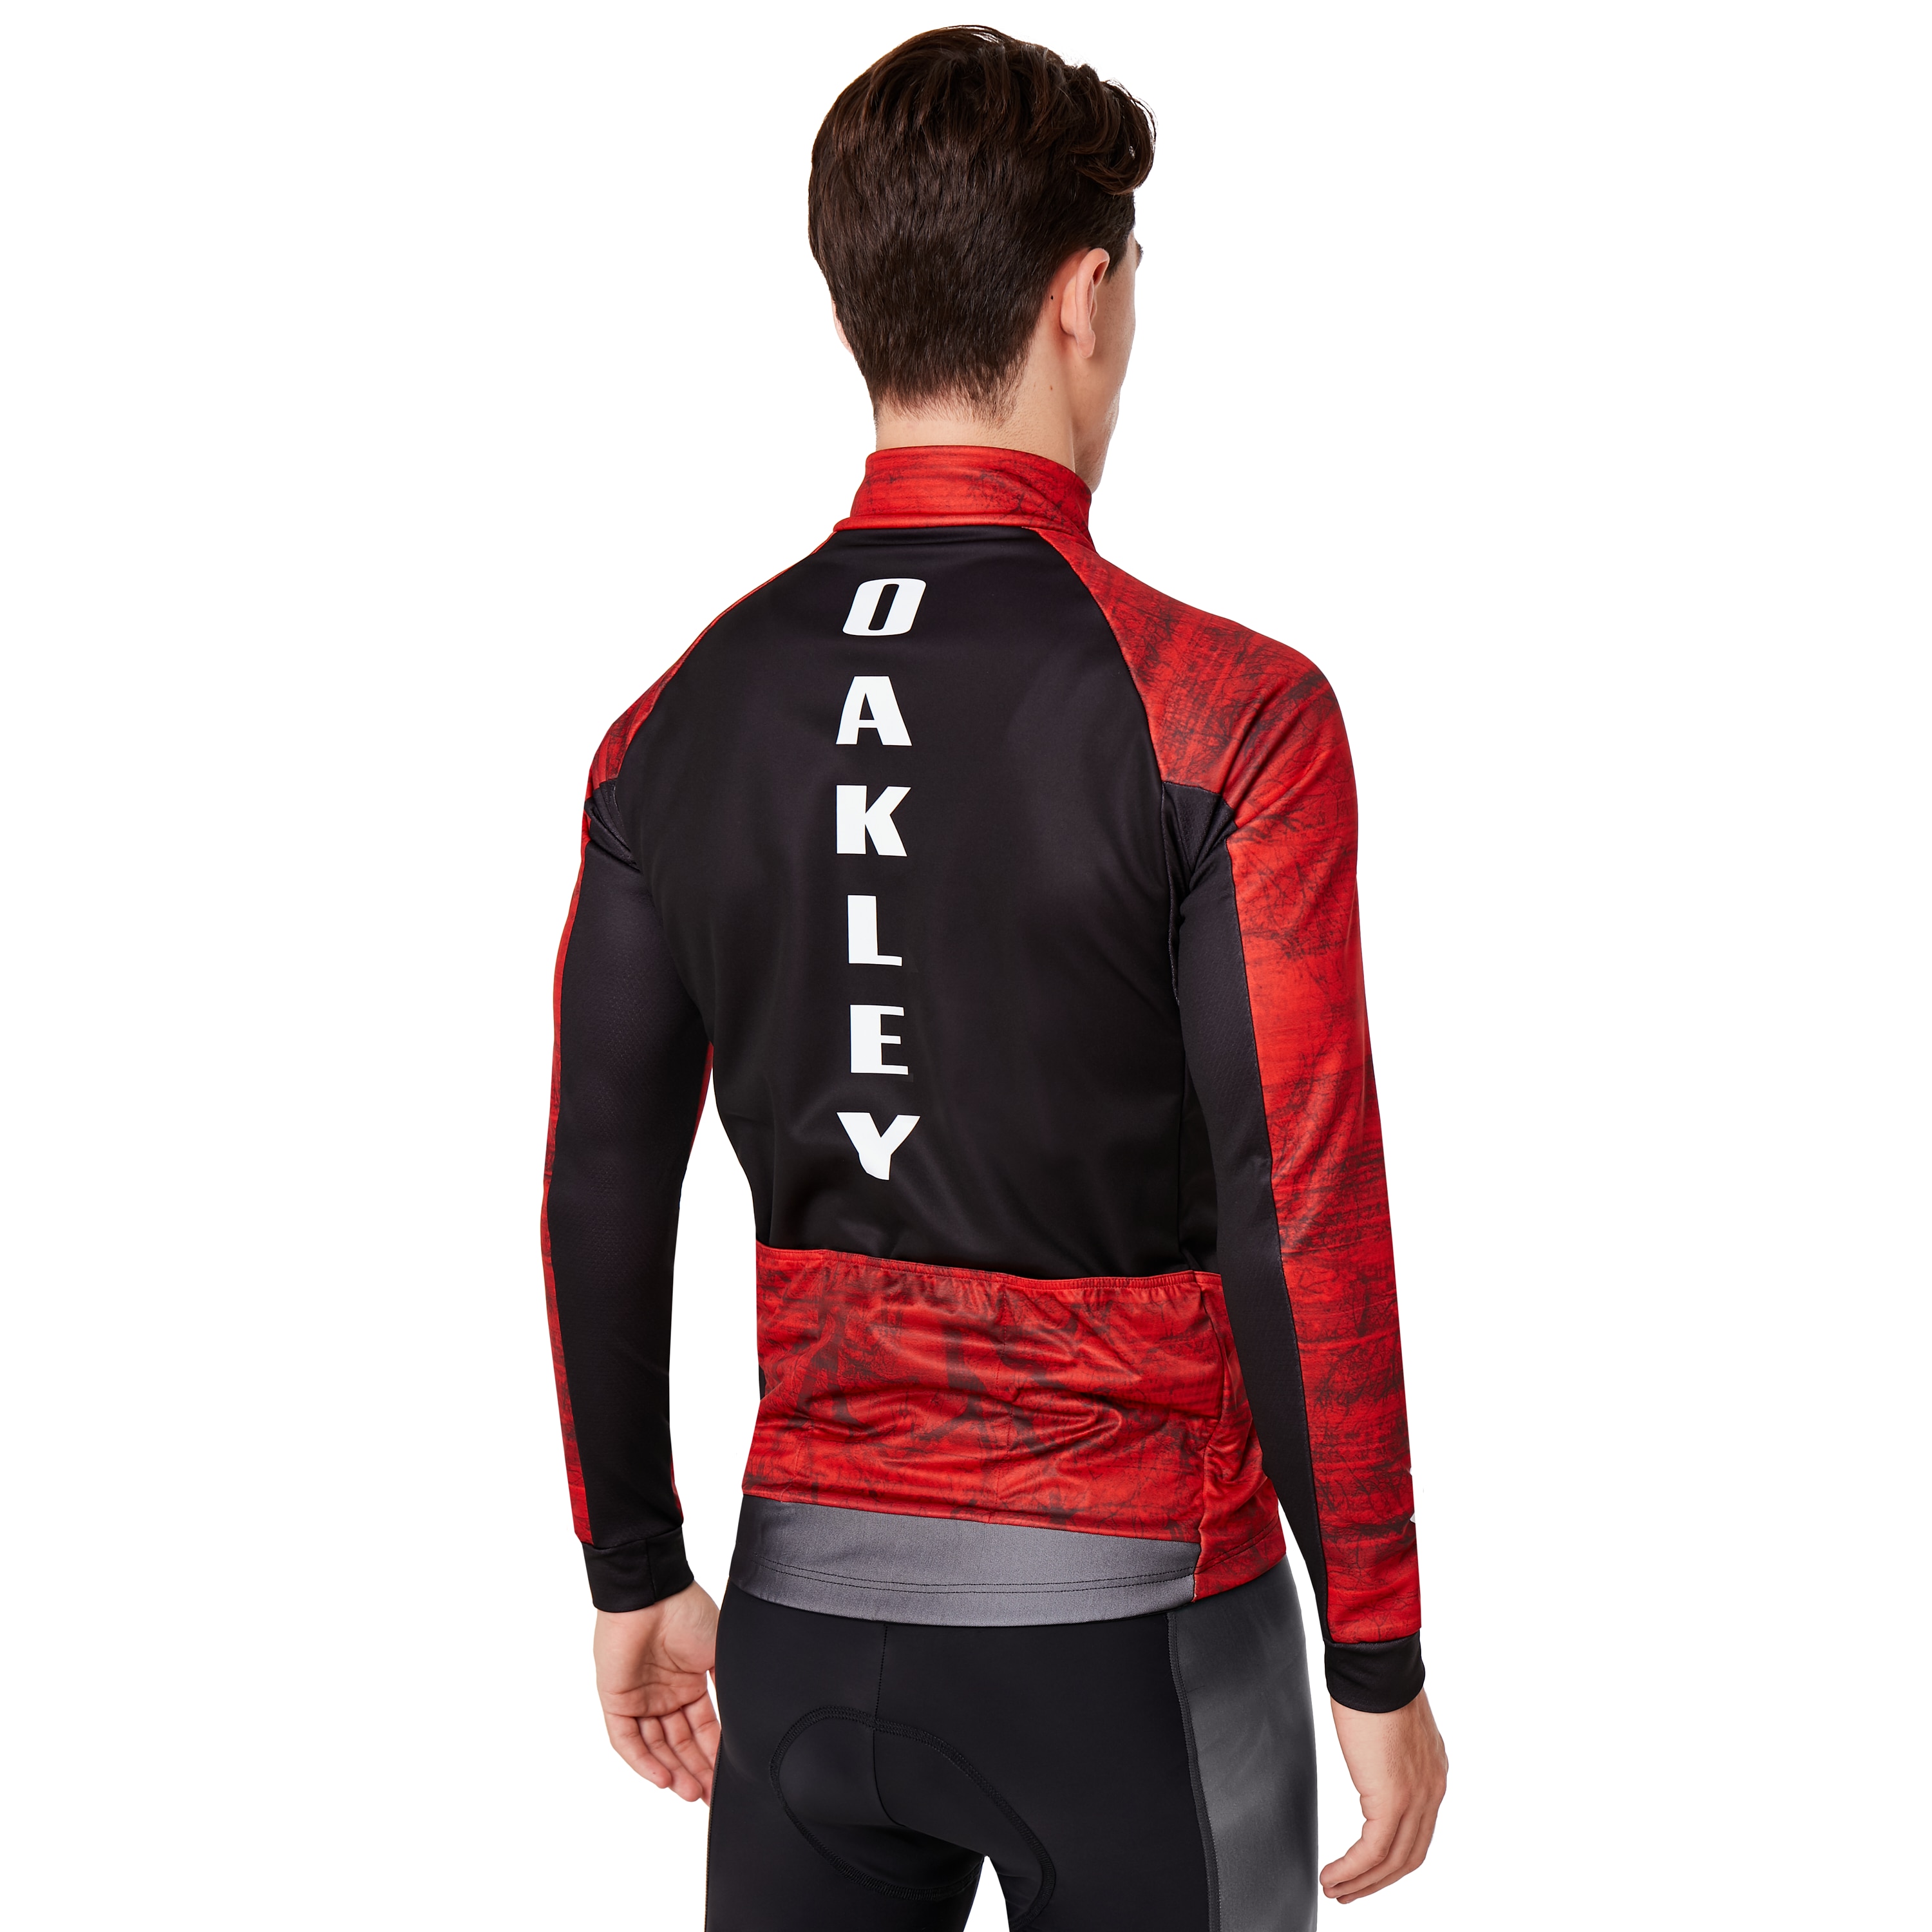 Oakley Cycling Aero Jacket - Fired 